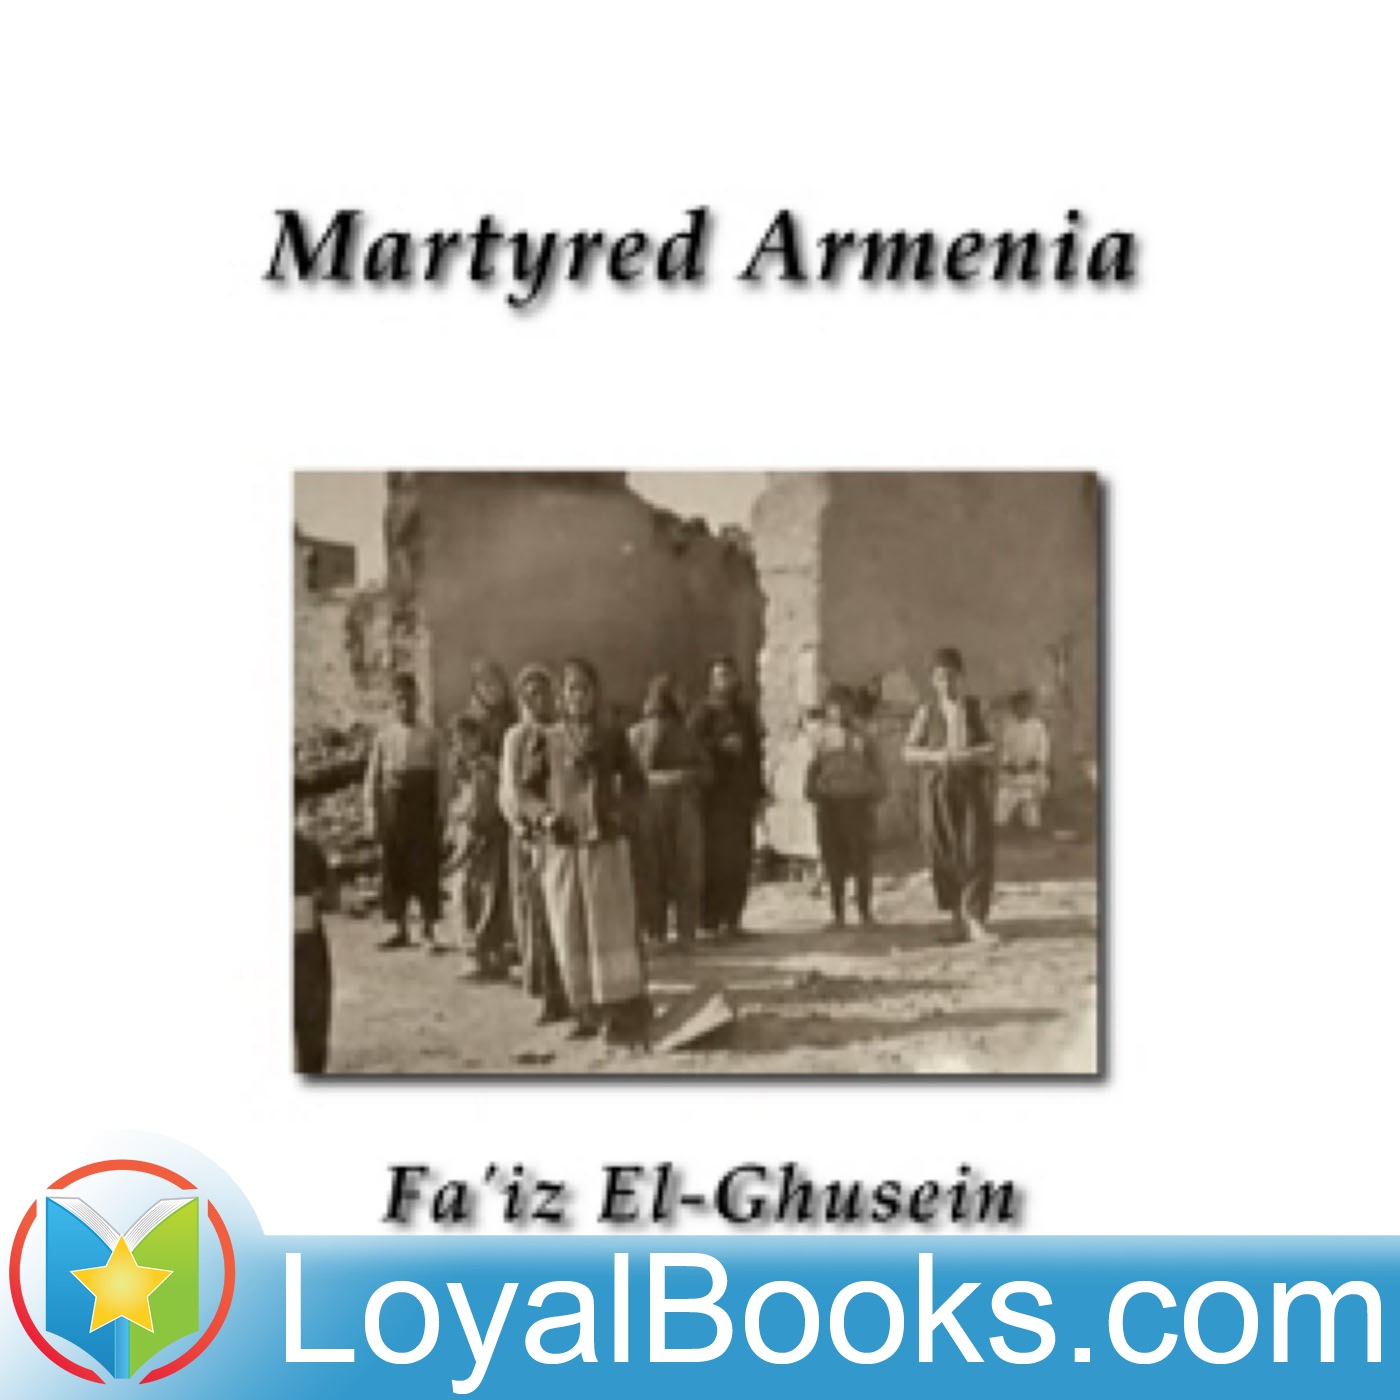 Martyred Armenia by Fa'iz El-Ghusein